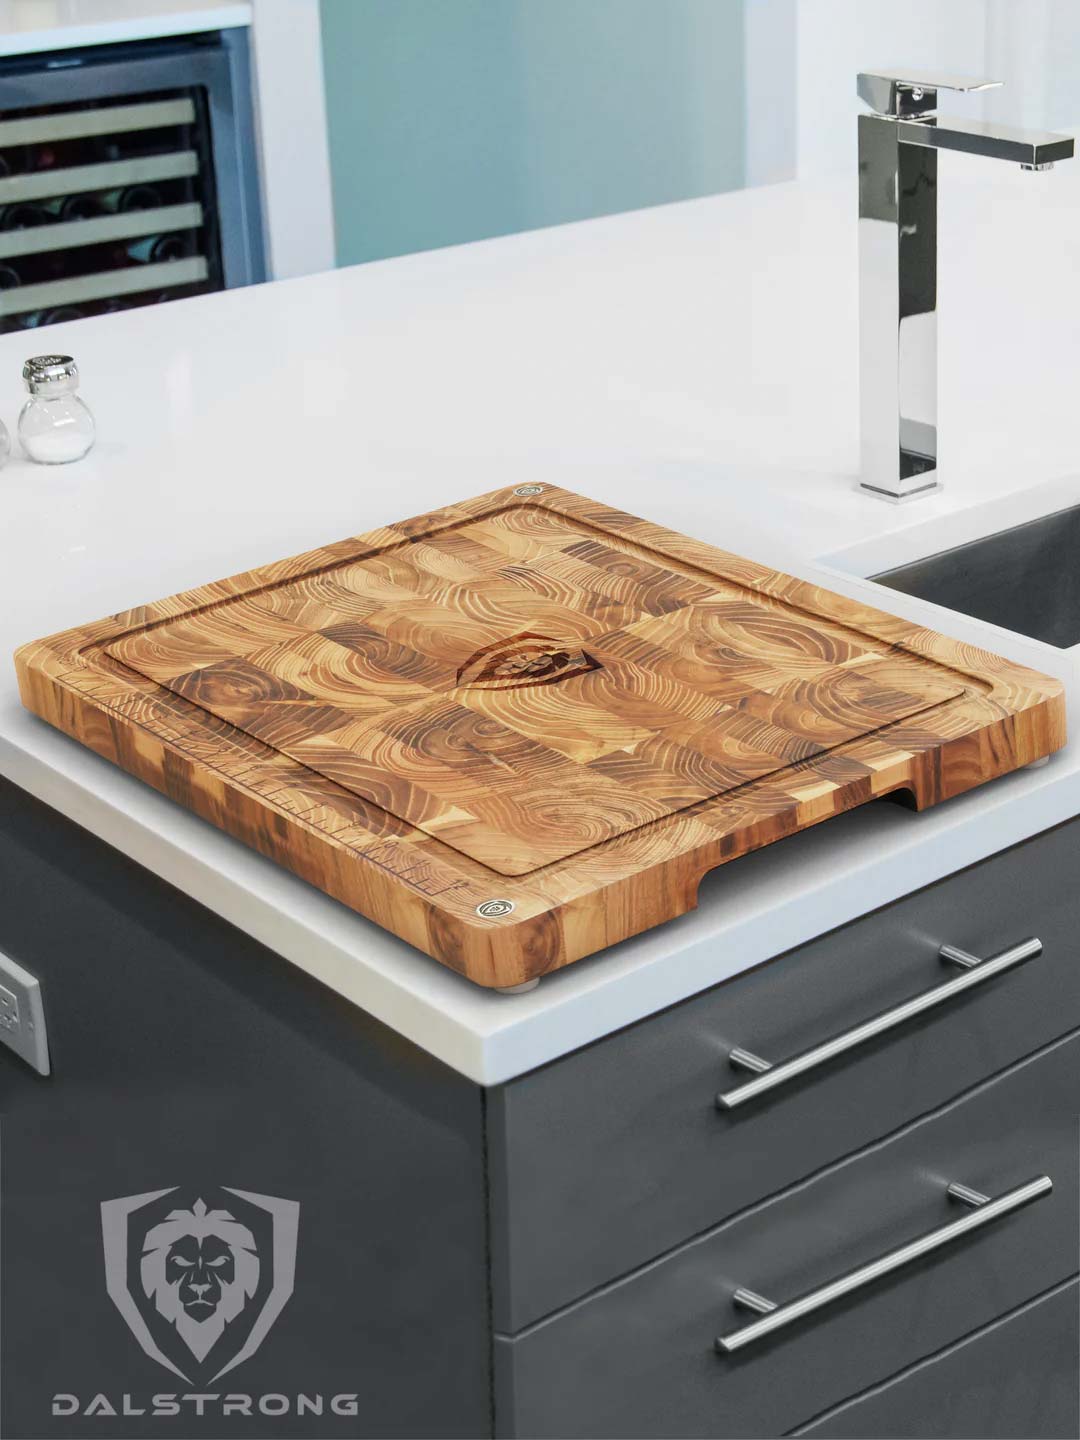 Kitchen 100% Teak Wood Cutting Boards for Kitchen Set of 5